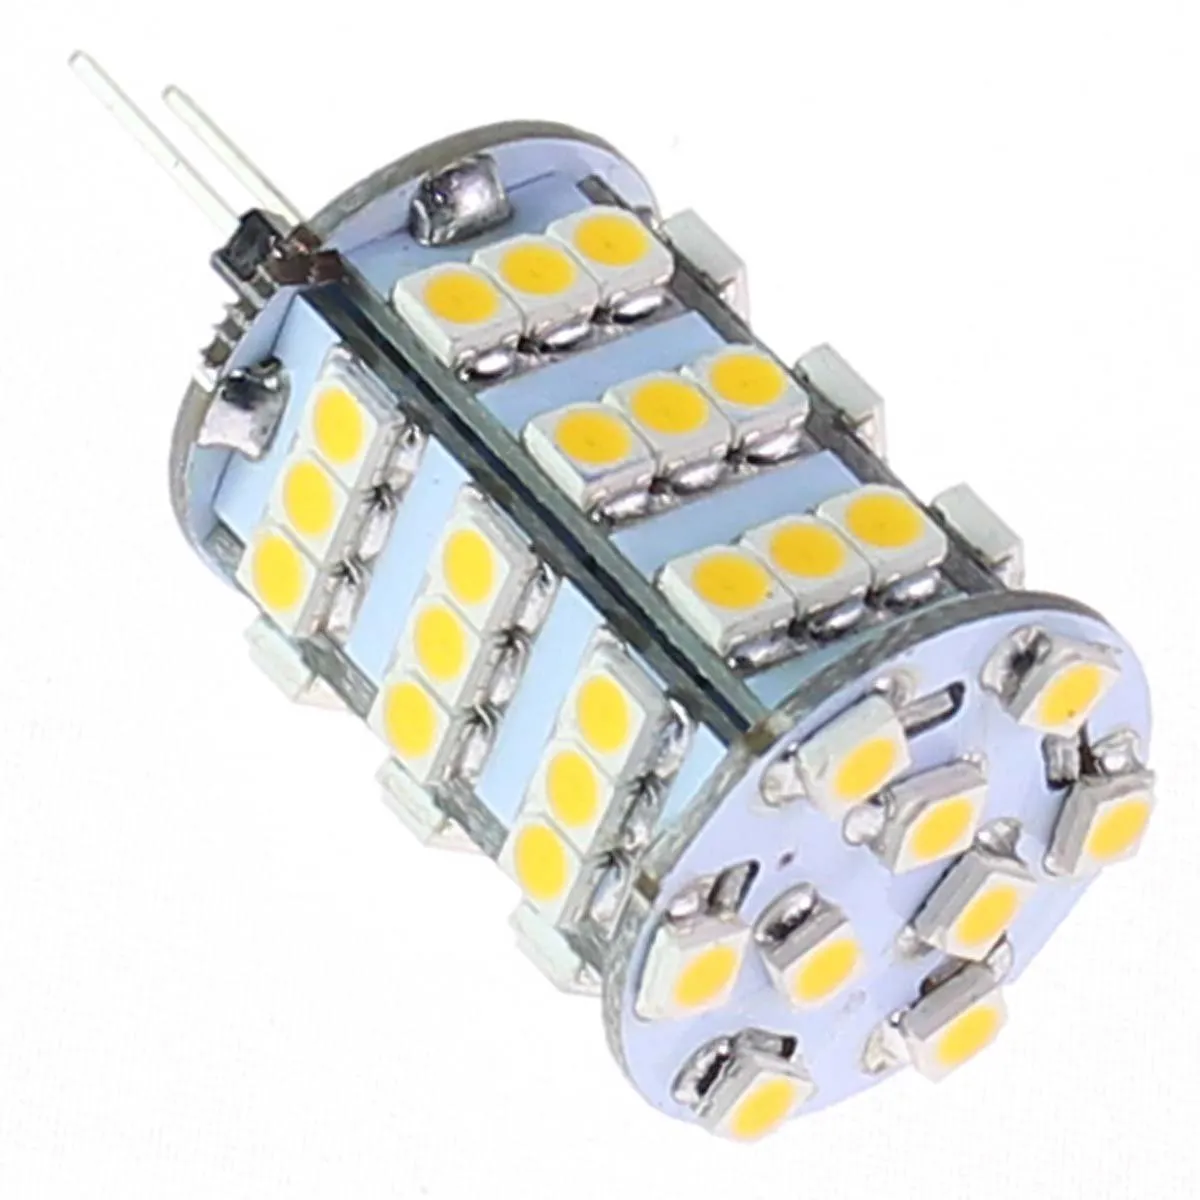 LED -lampen RV LED -licht G4 300 lumen 120 SMD 3528 Verticale pennen Lichten Mariene bootlampen